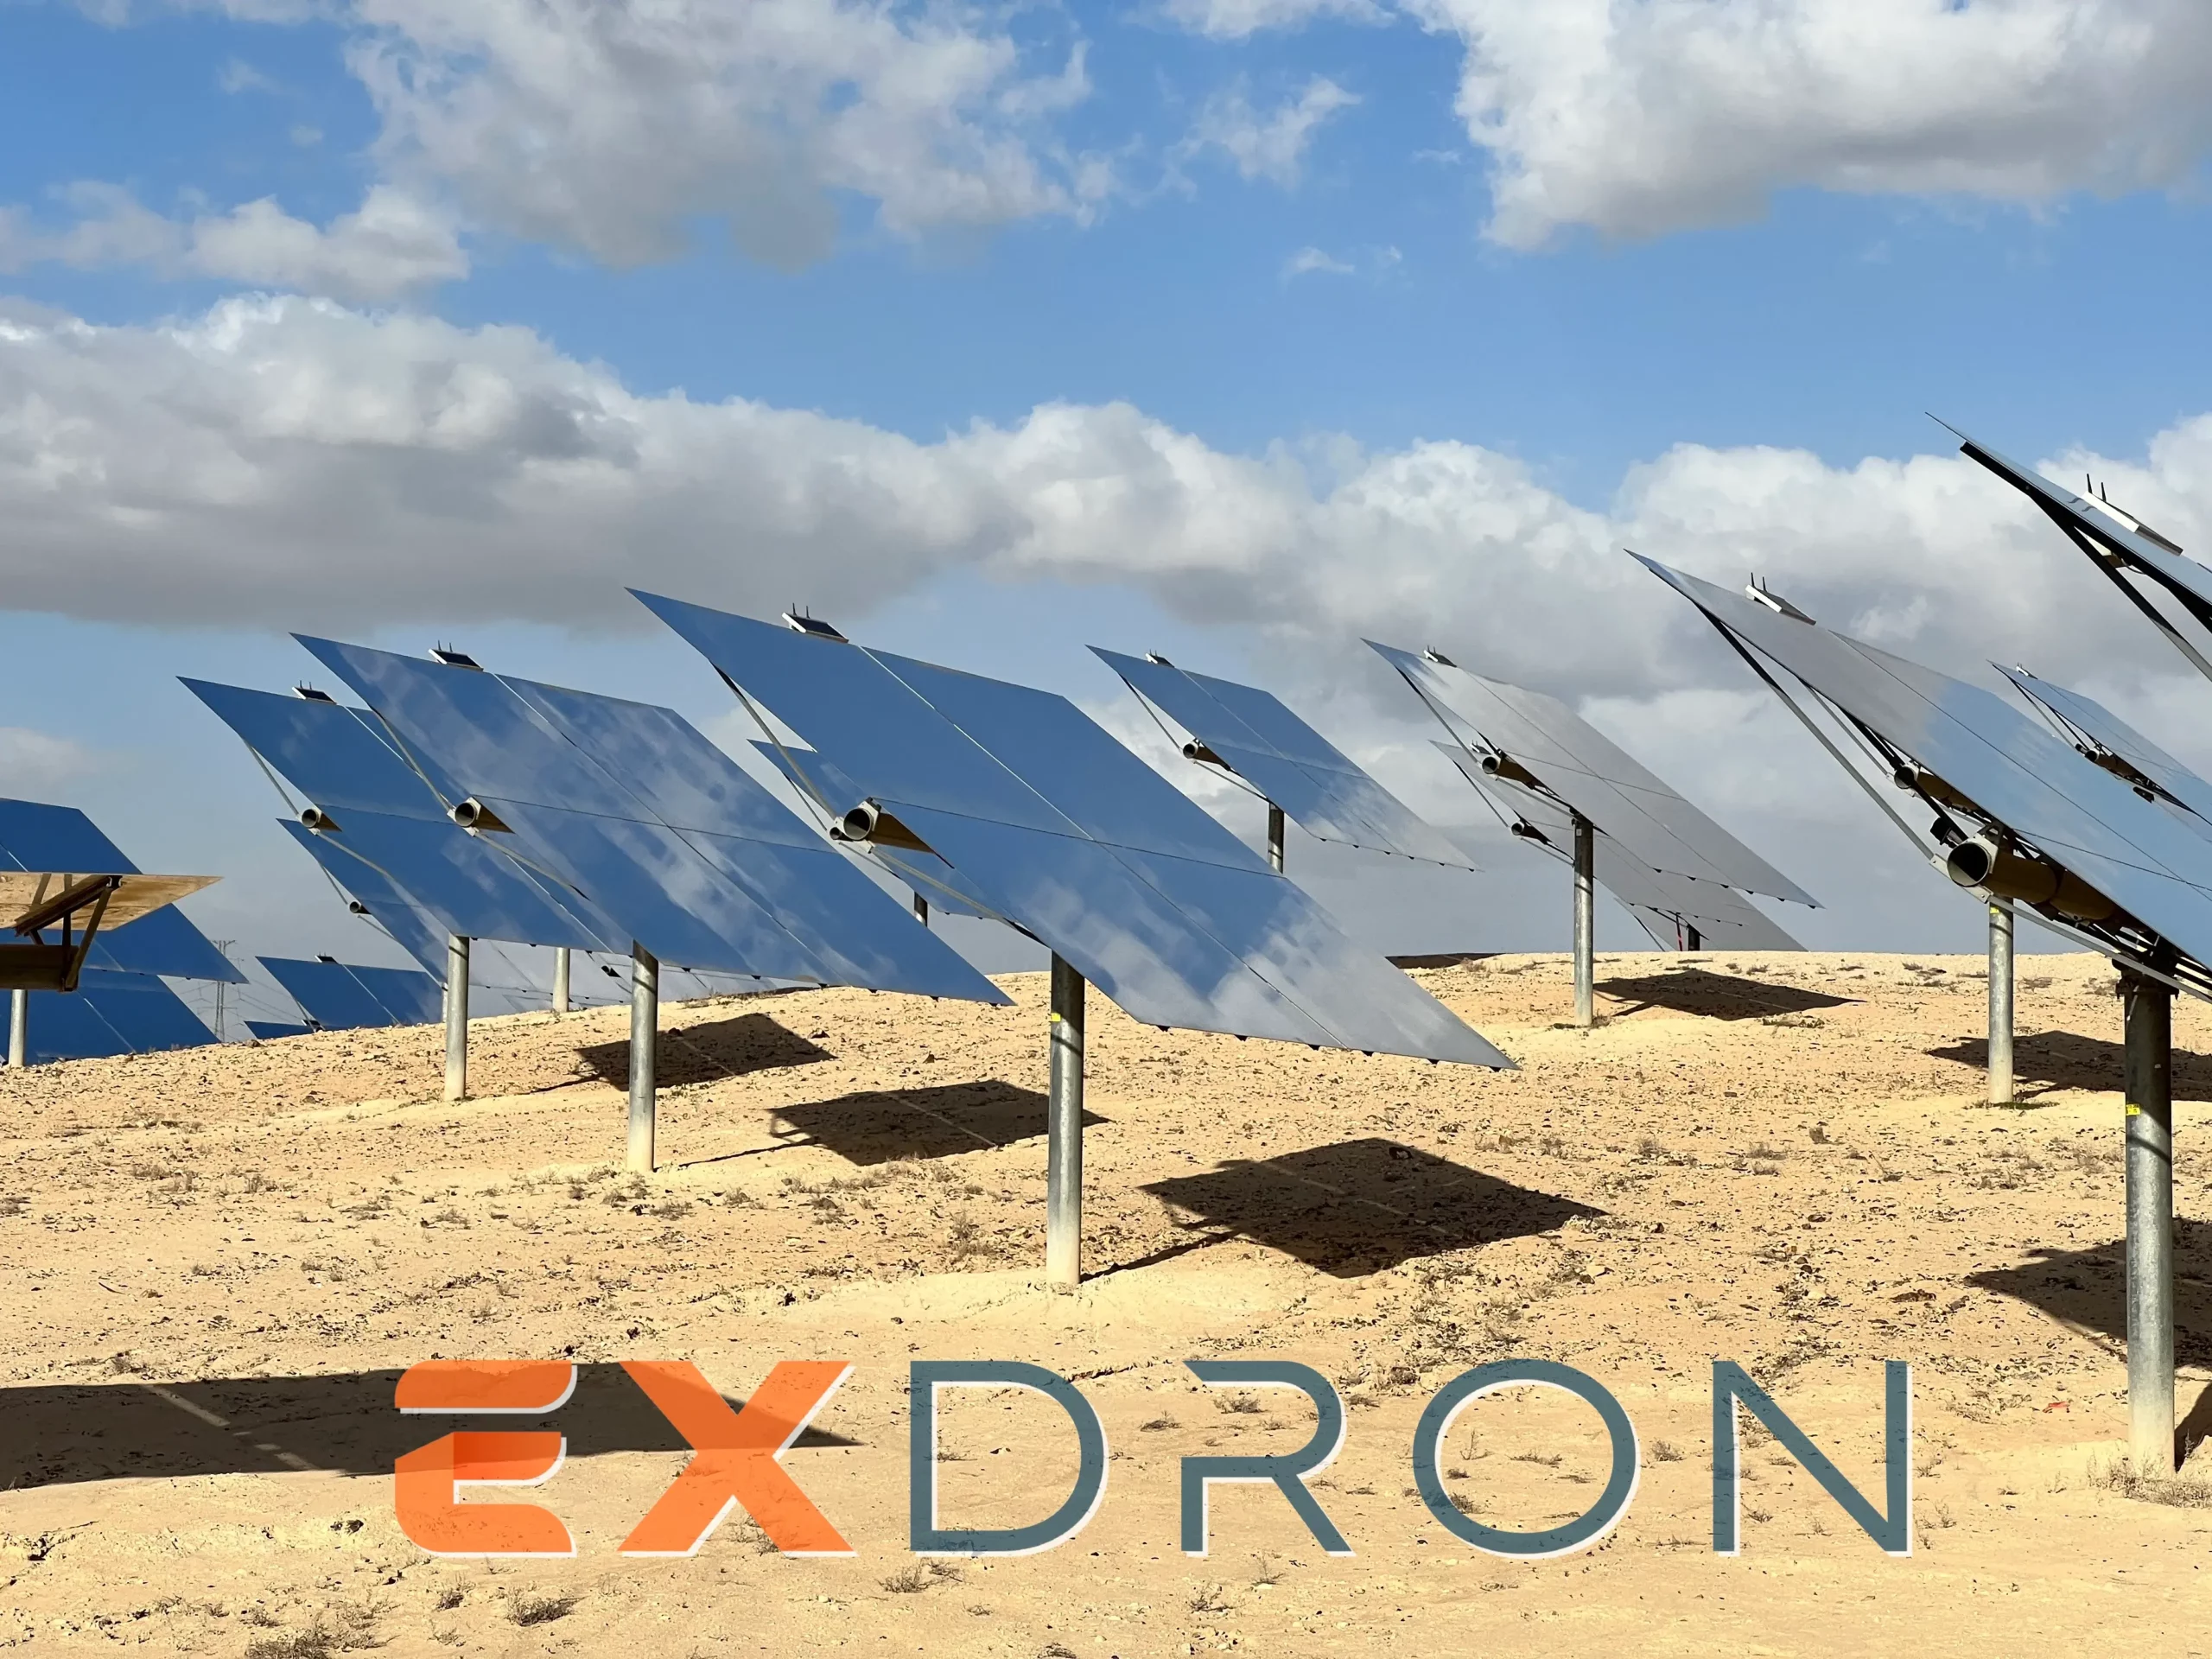 exdron fumehoods special projects GE solar power plant fumehood israel6 scaled